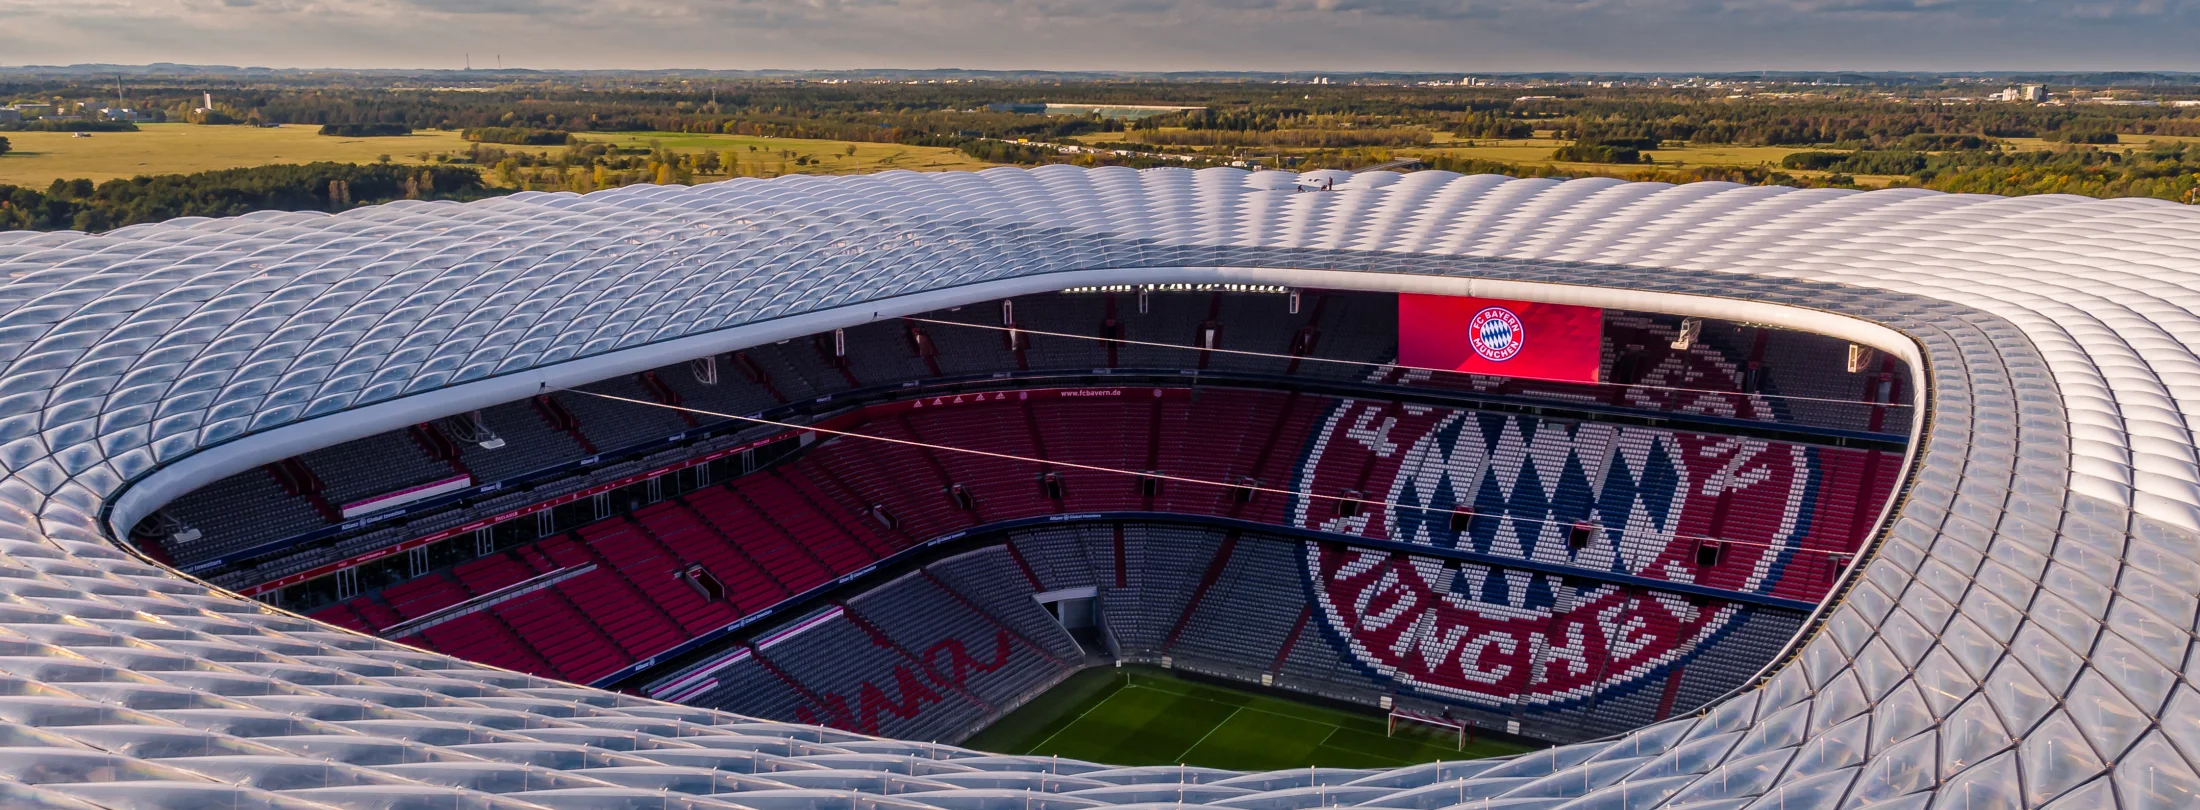 Allianz Arena, History, Description, & Facts